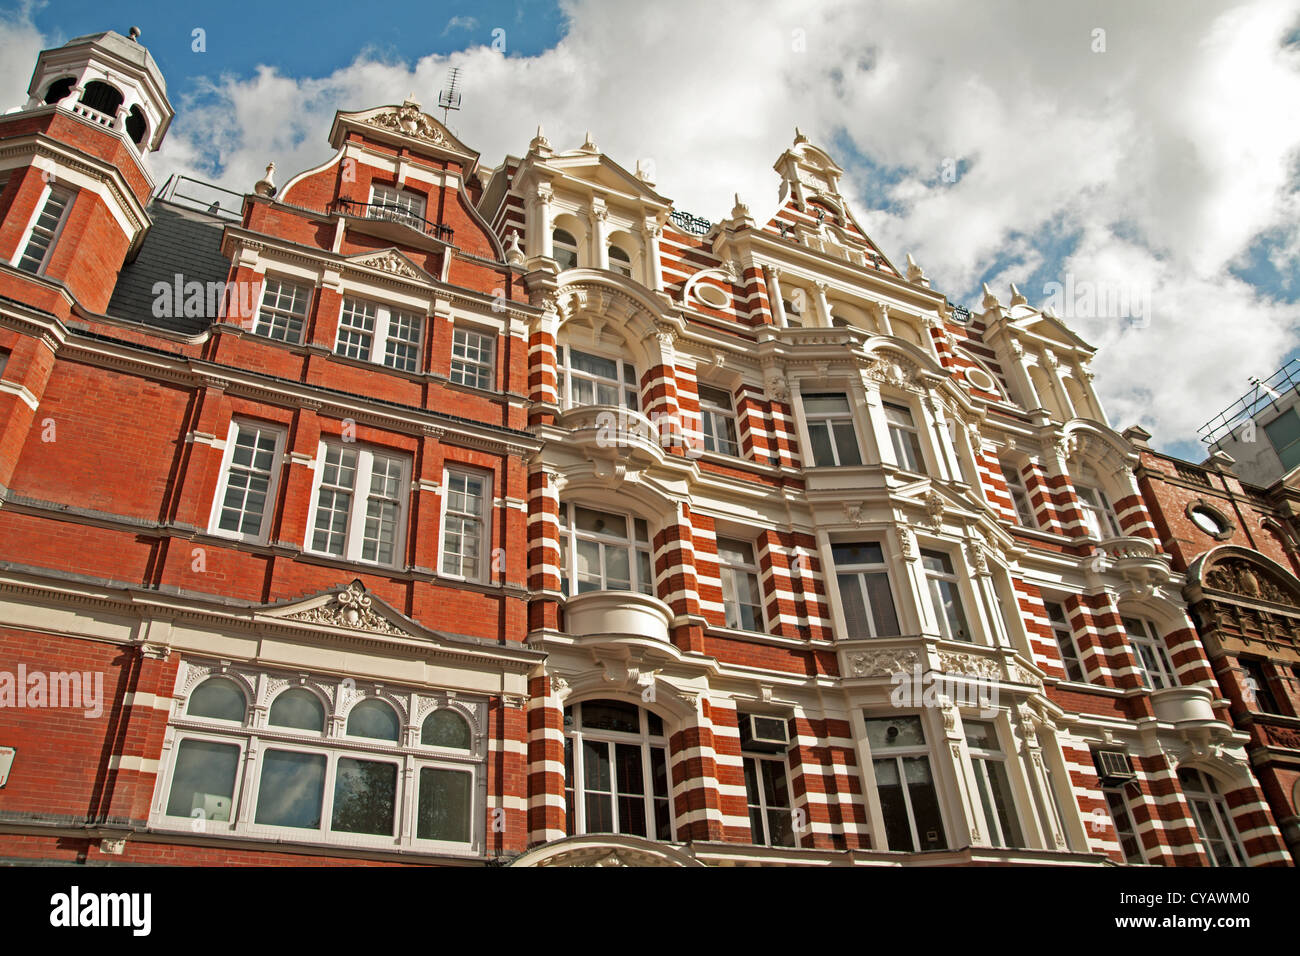 Architecture on Sloane Square, Royal Borough of Kensington and Chelsea, London, England, United Kingdom, Europe Stock Photo